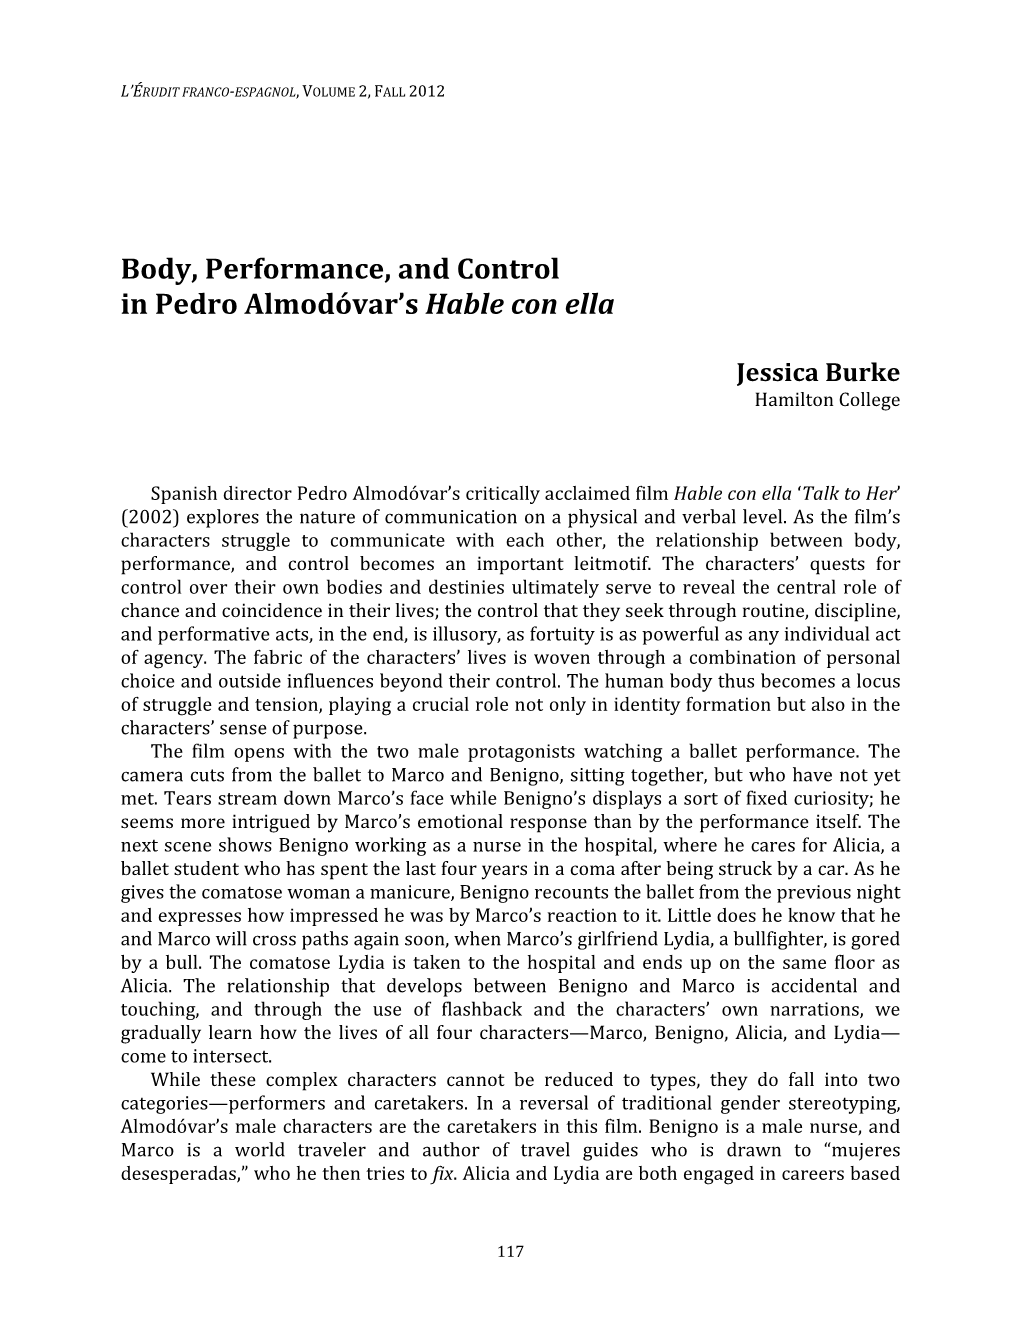 Body, Performance, and Control in Pedro Almodóvar's Hable Con Ella